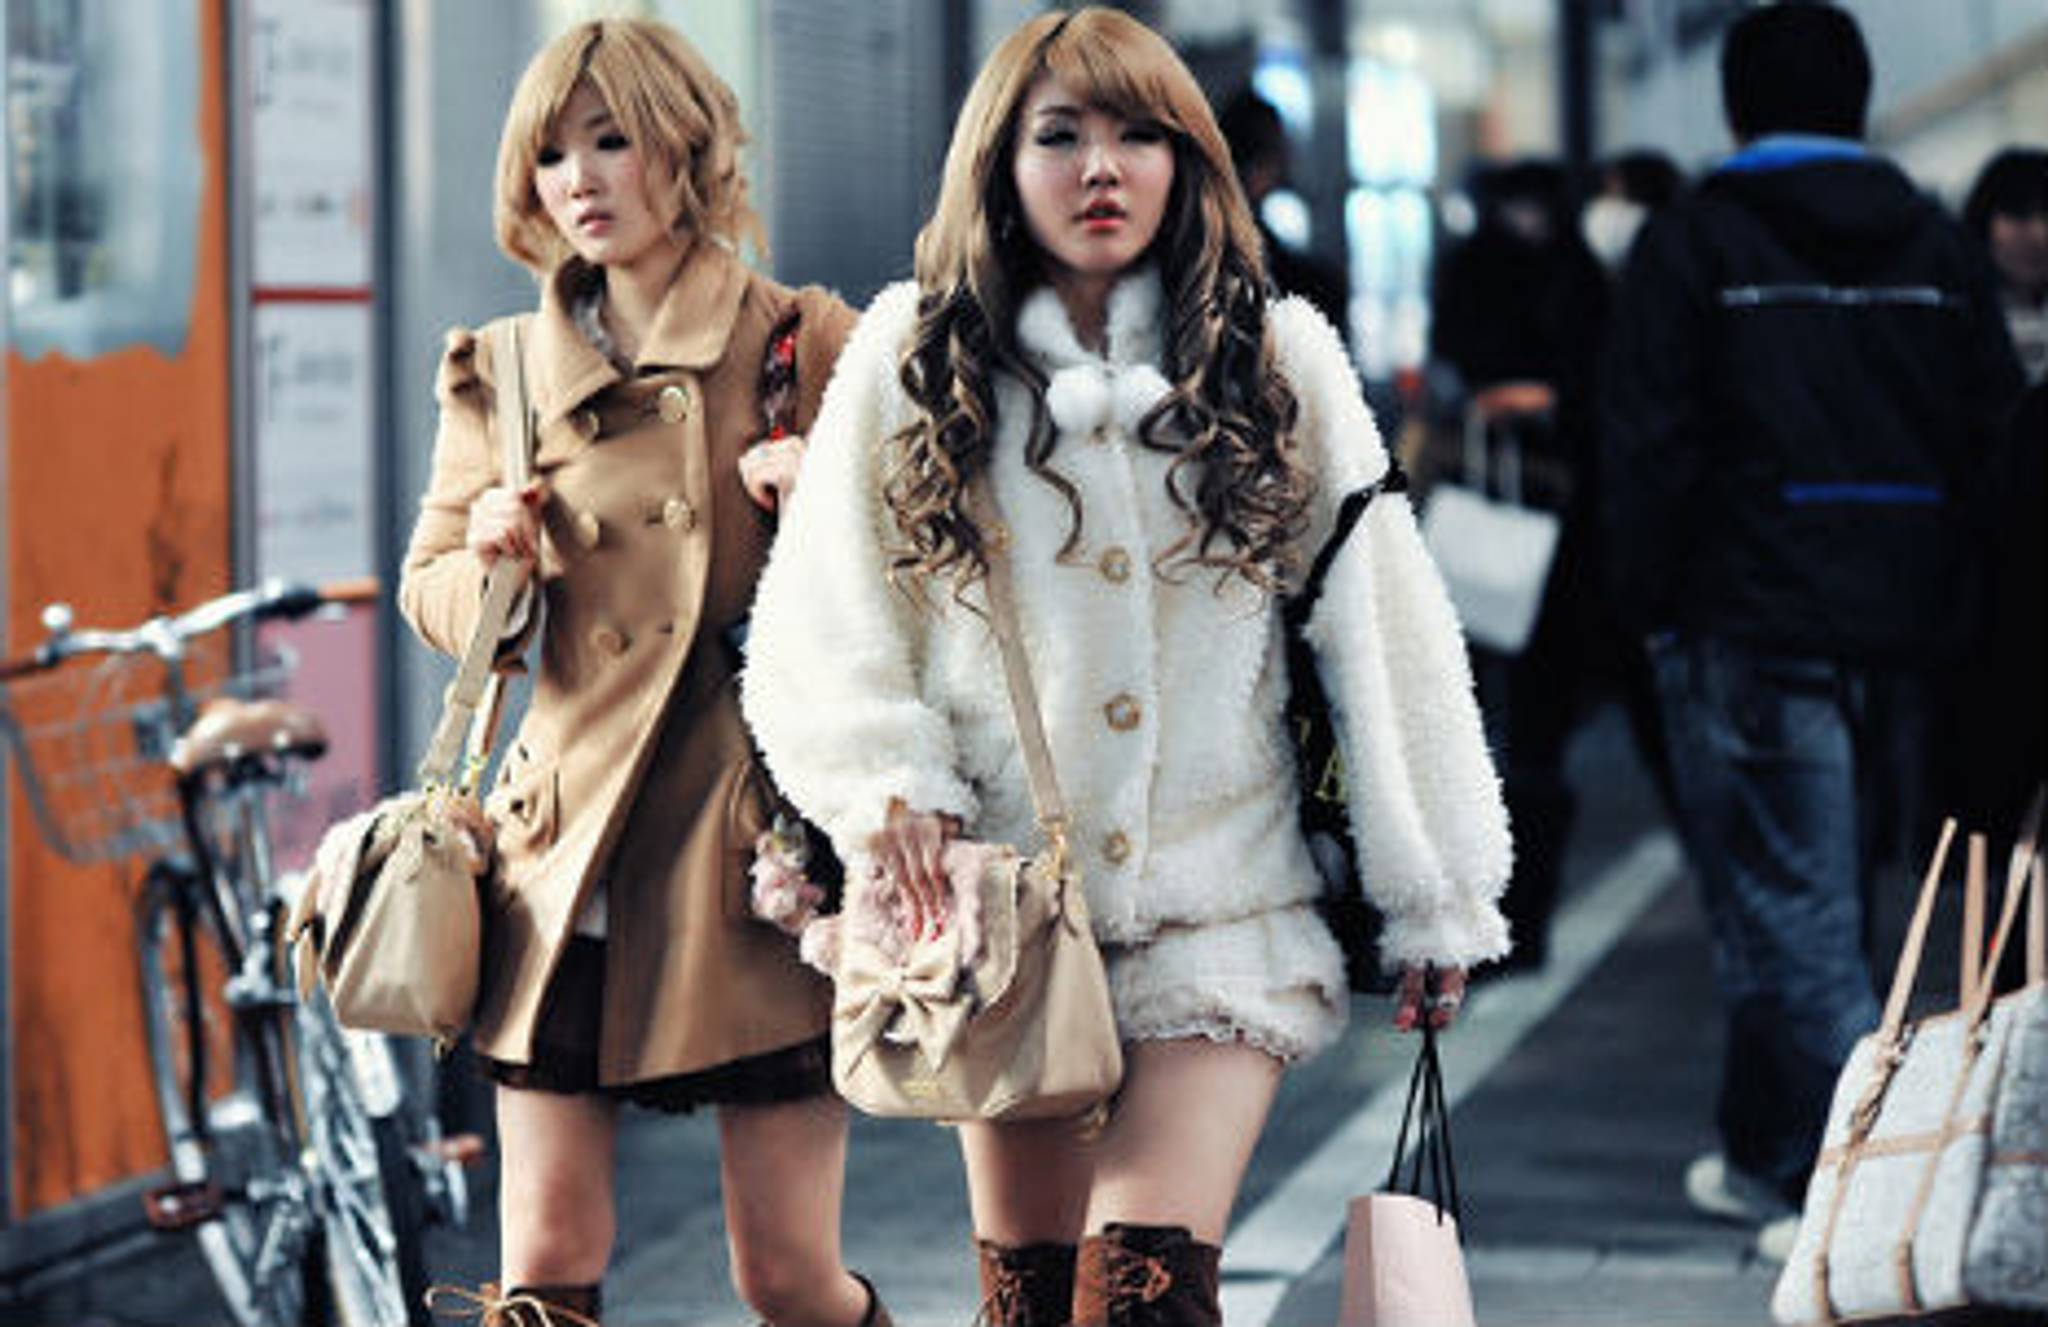 Turning customers into walking fashion ads